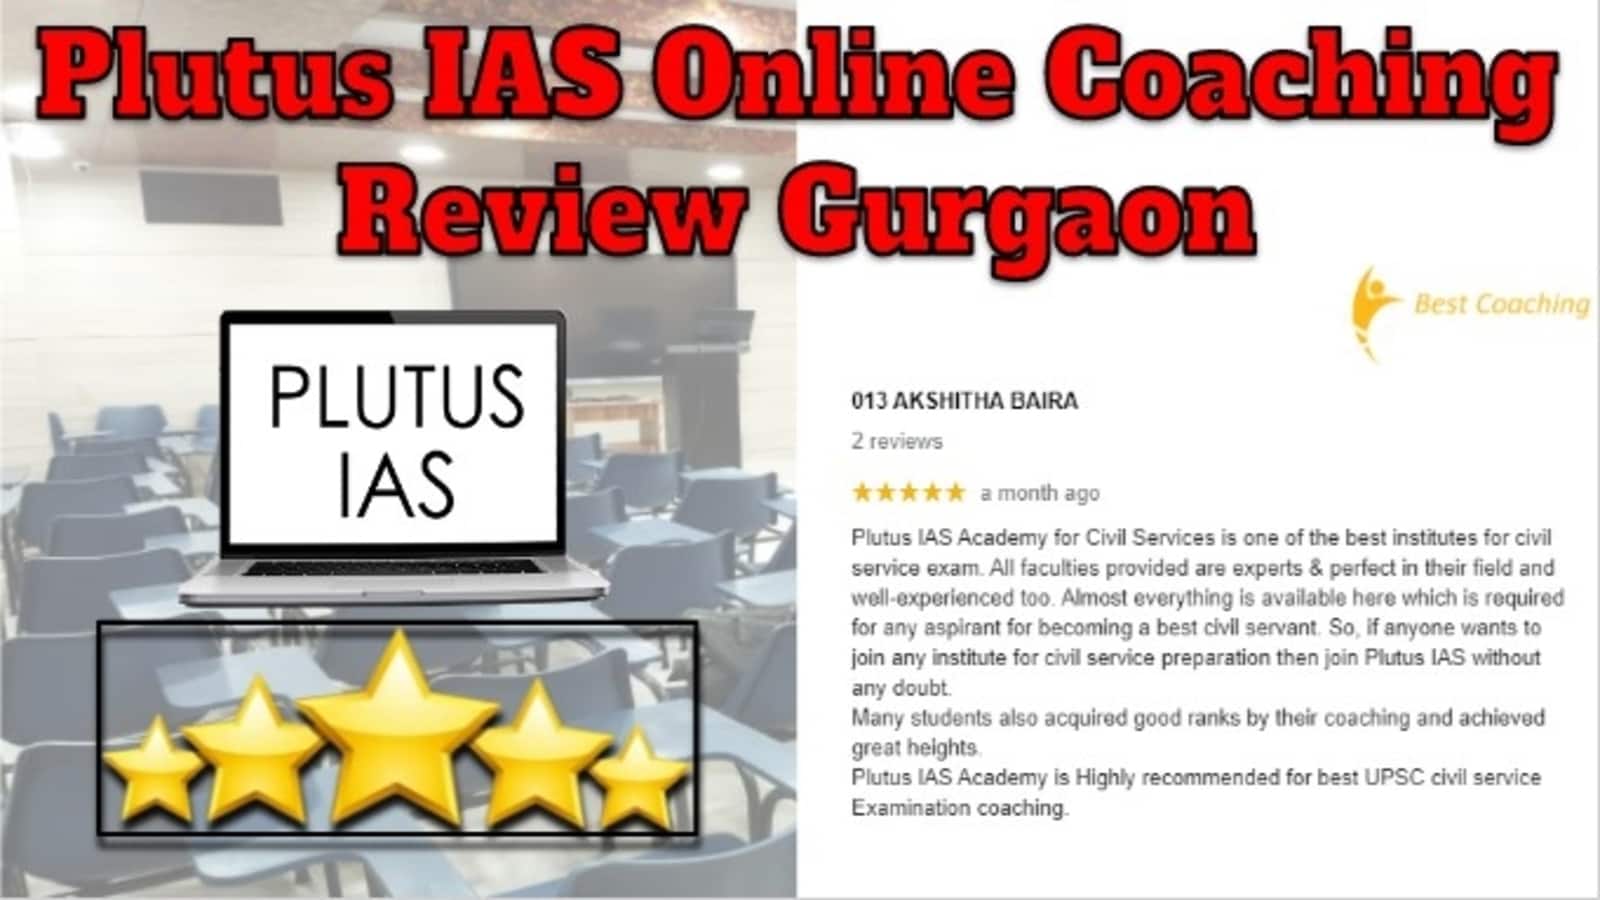 Plutus IAS Online Coaching Review Gurgaon